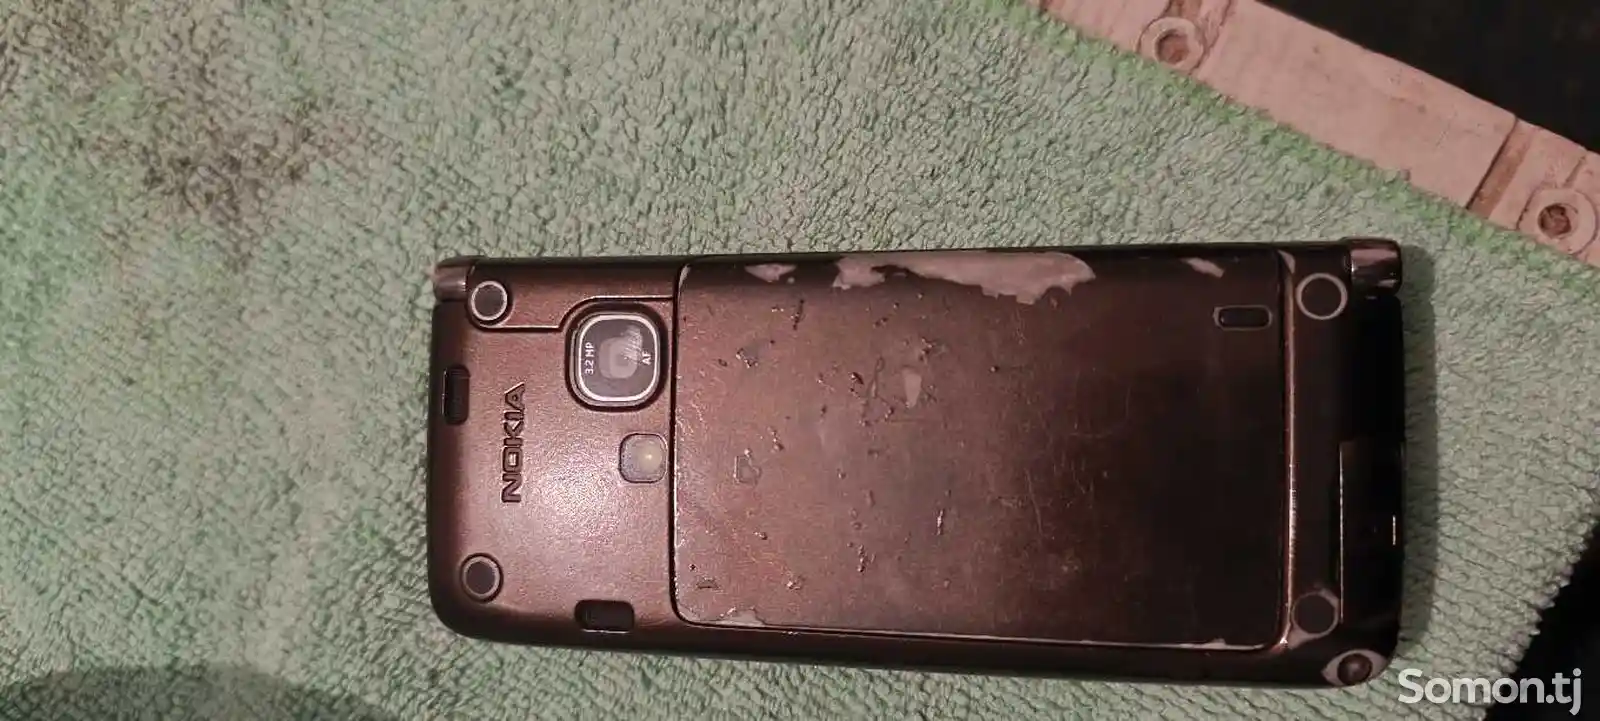 Nokia E90-2